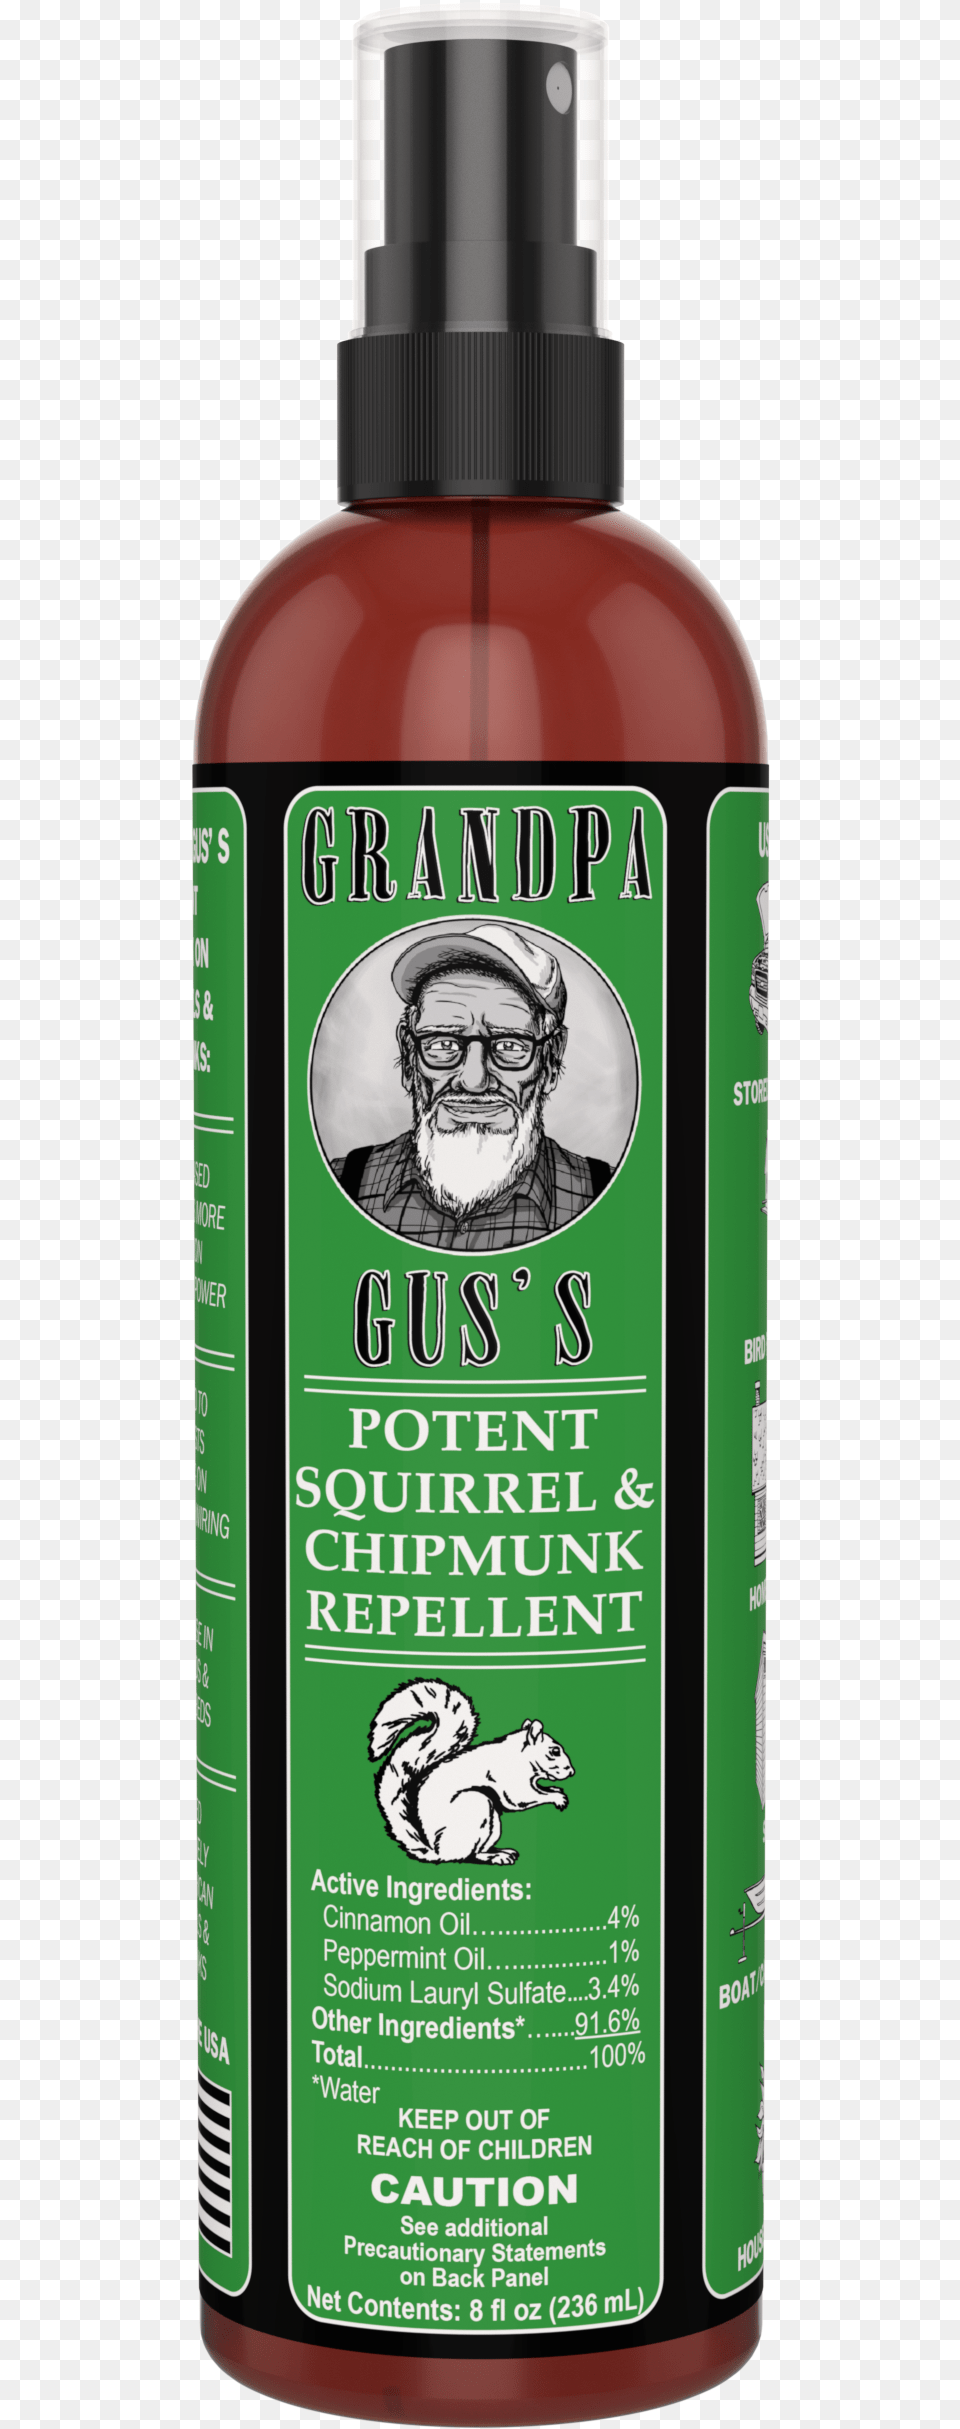 Squirrel Amp Chipmunk Repellent Insect Repellent, Bottle, Adult, Man, Male Free Transparent Png